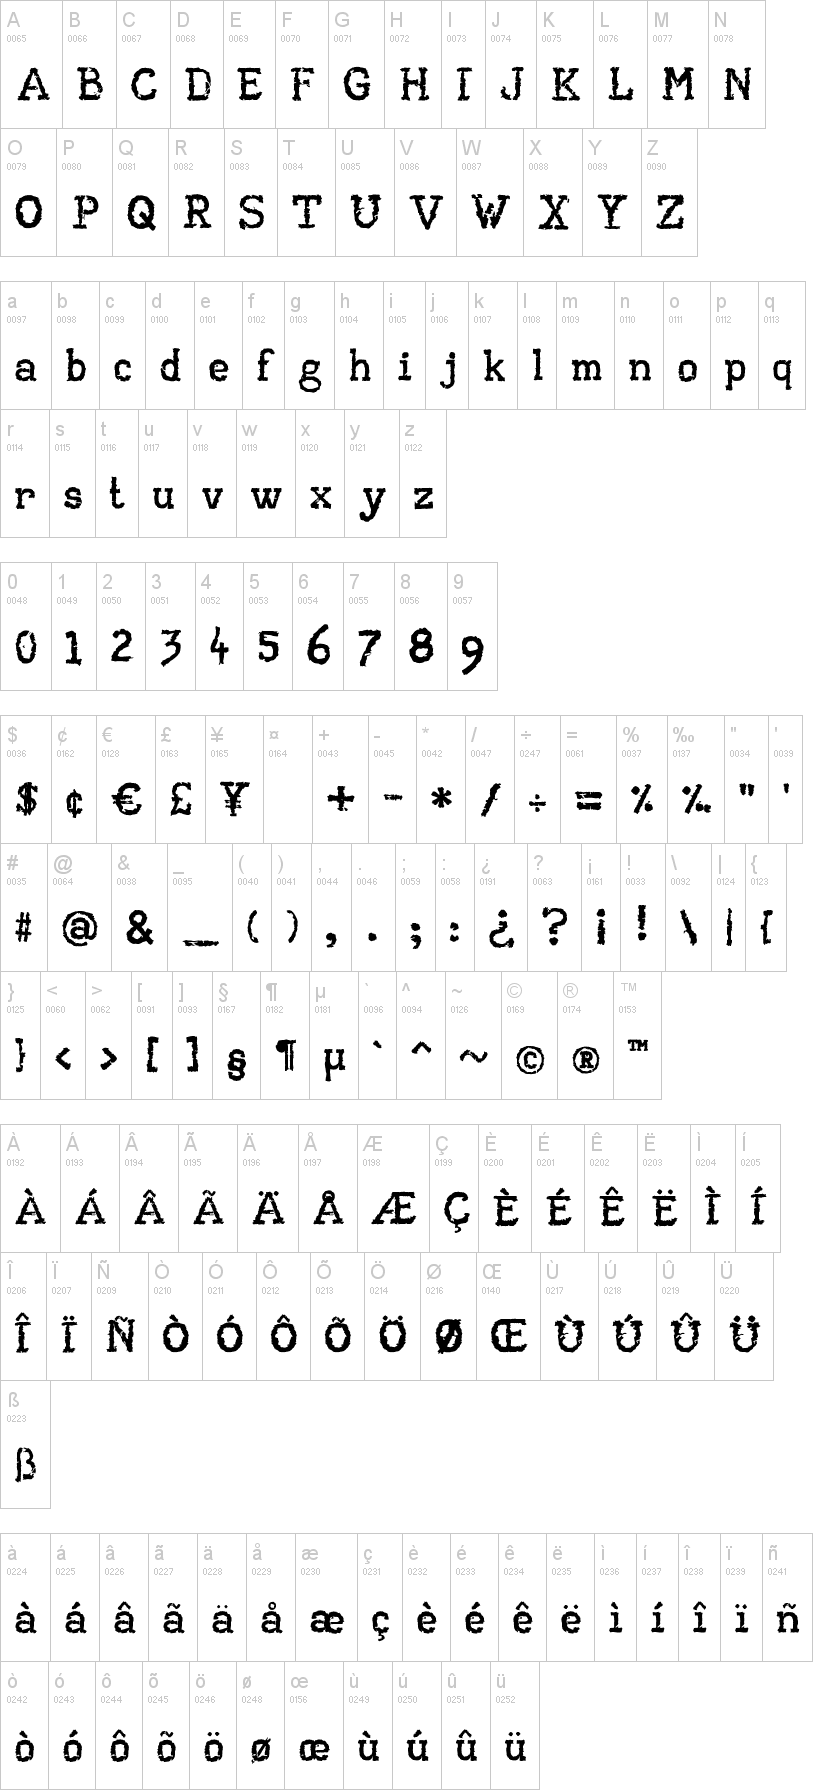 american typewriter font straight